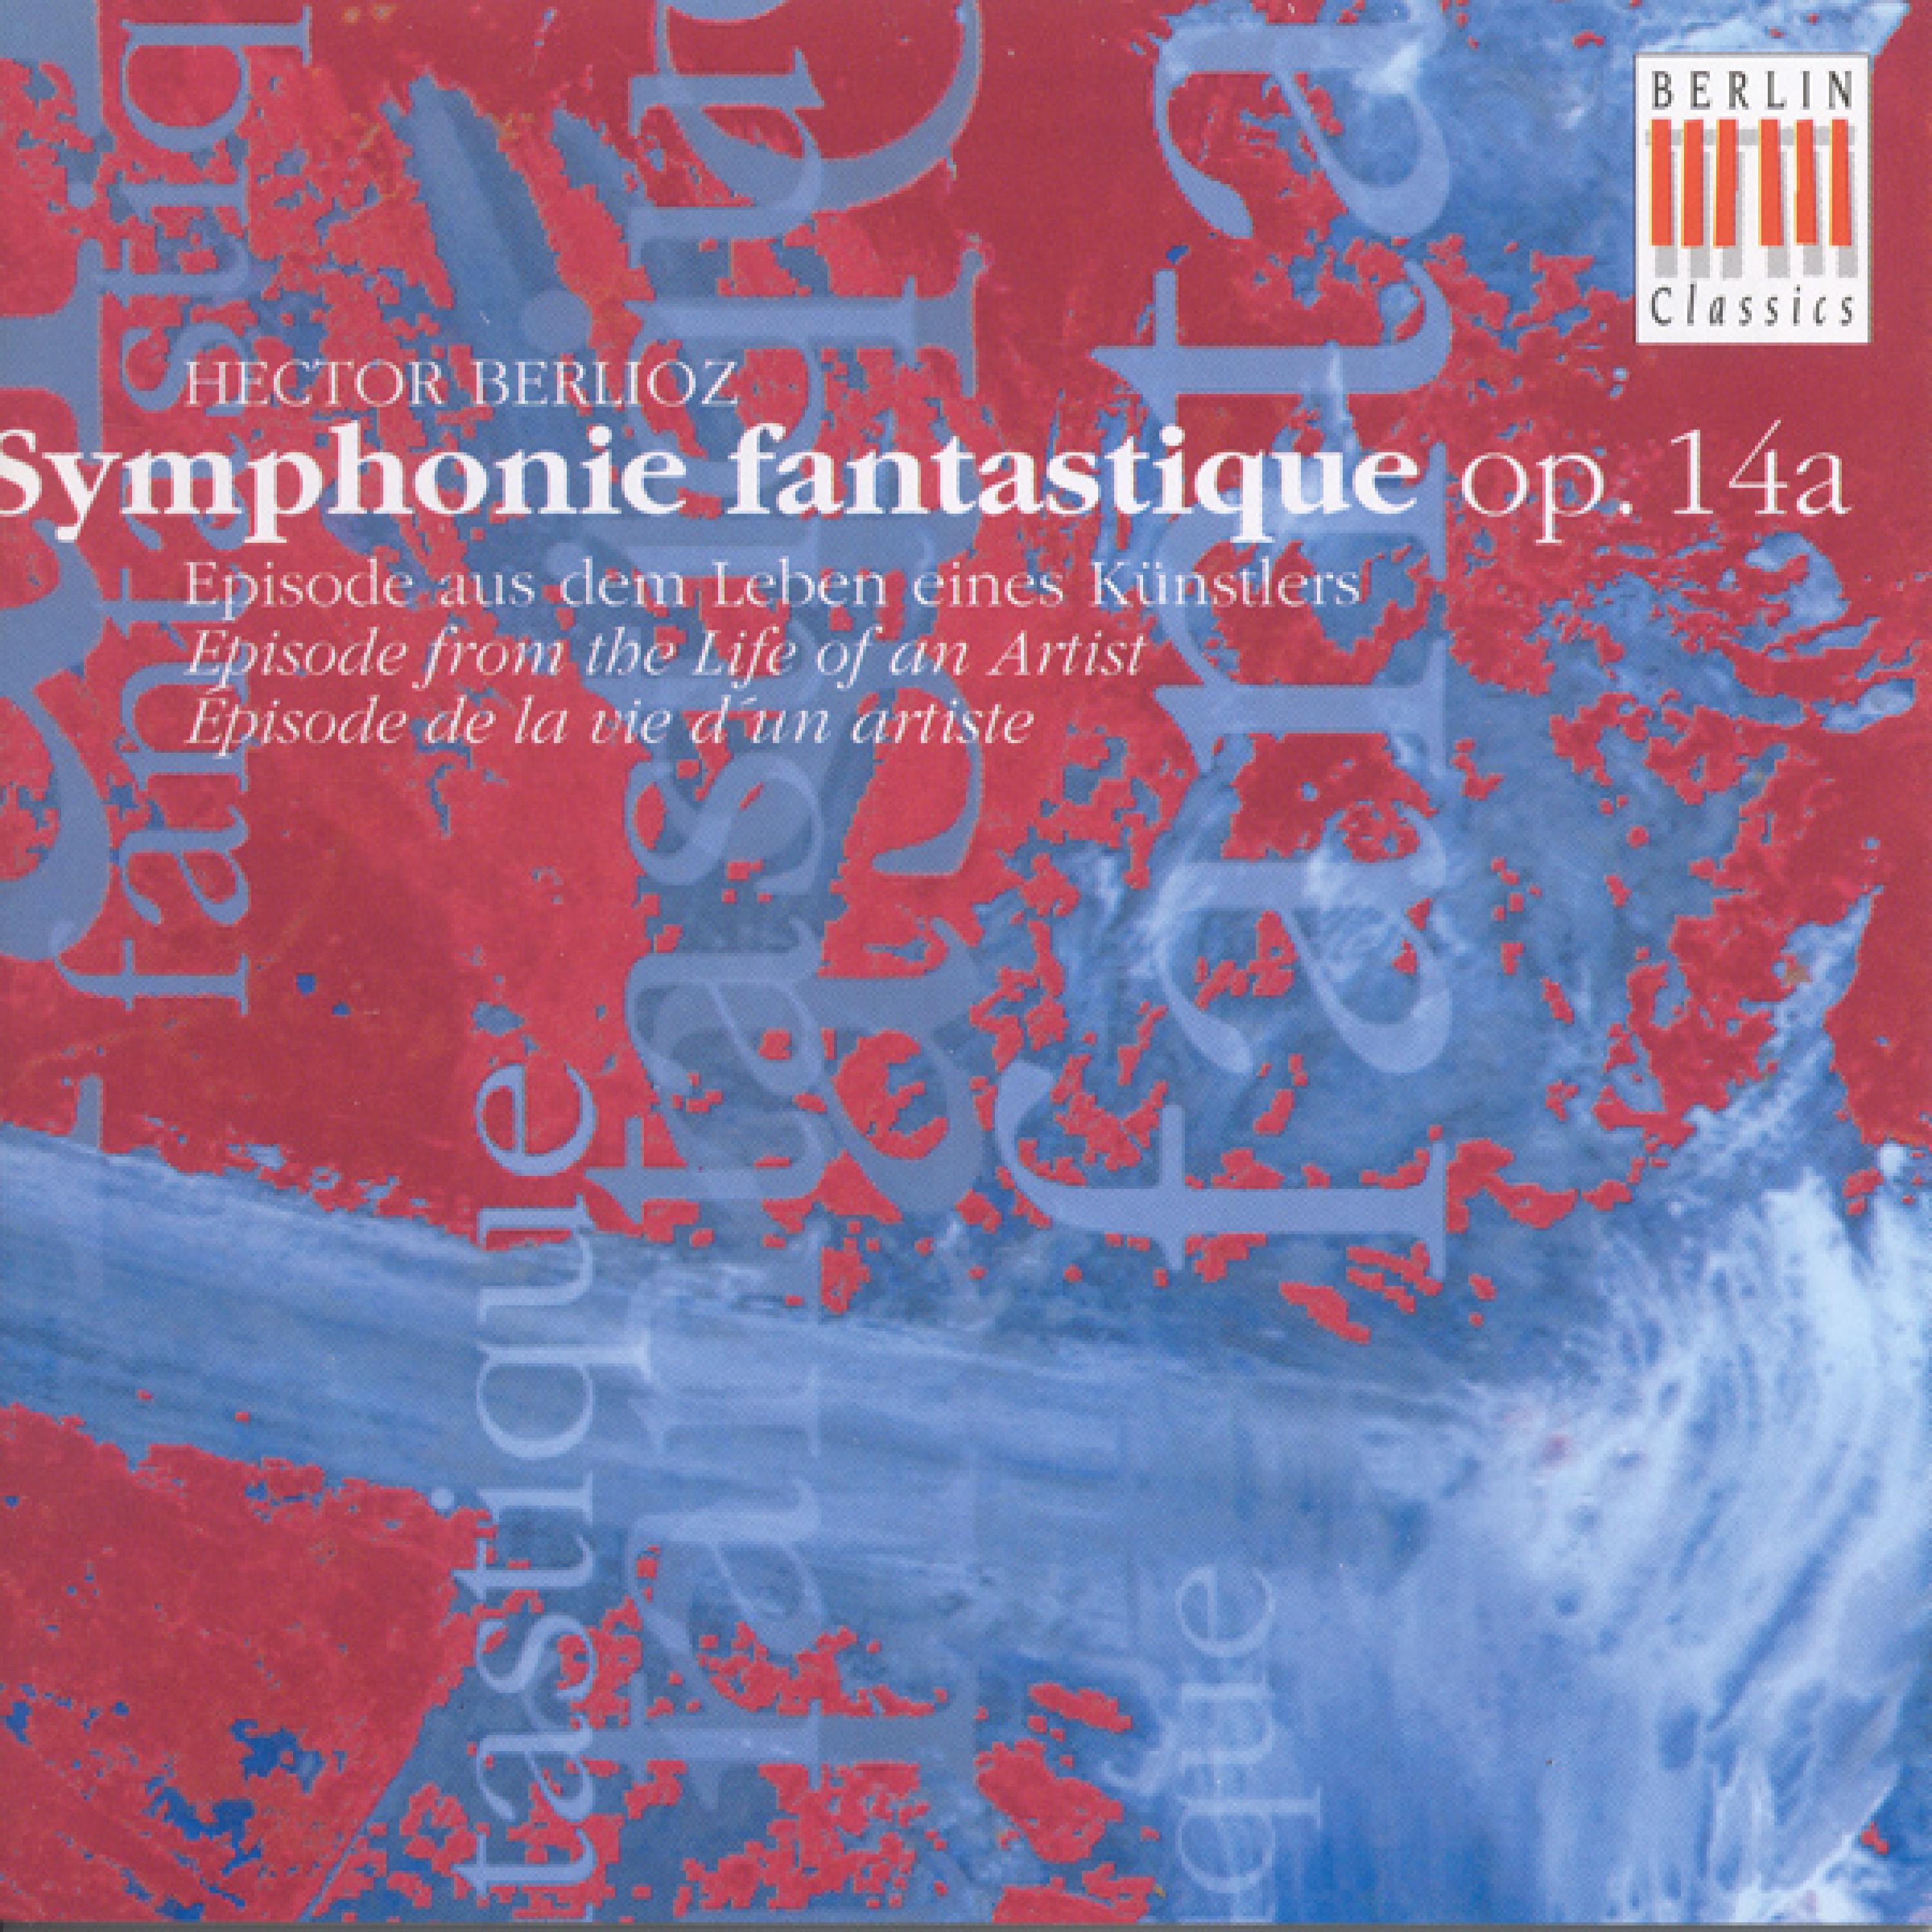 Symphonie fantastique Op. 14: I. Reveries: Largo - Passions: Allegro agitato e appassionato assai